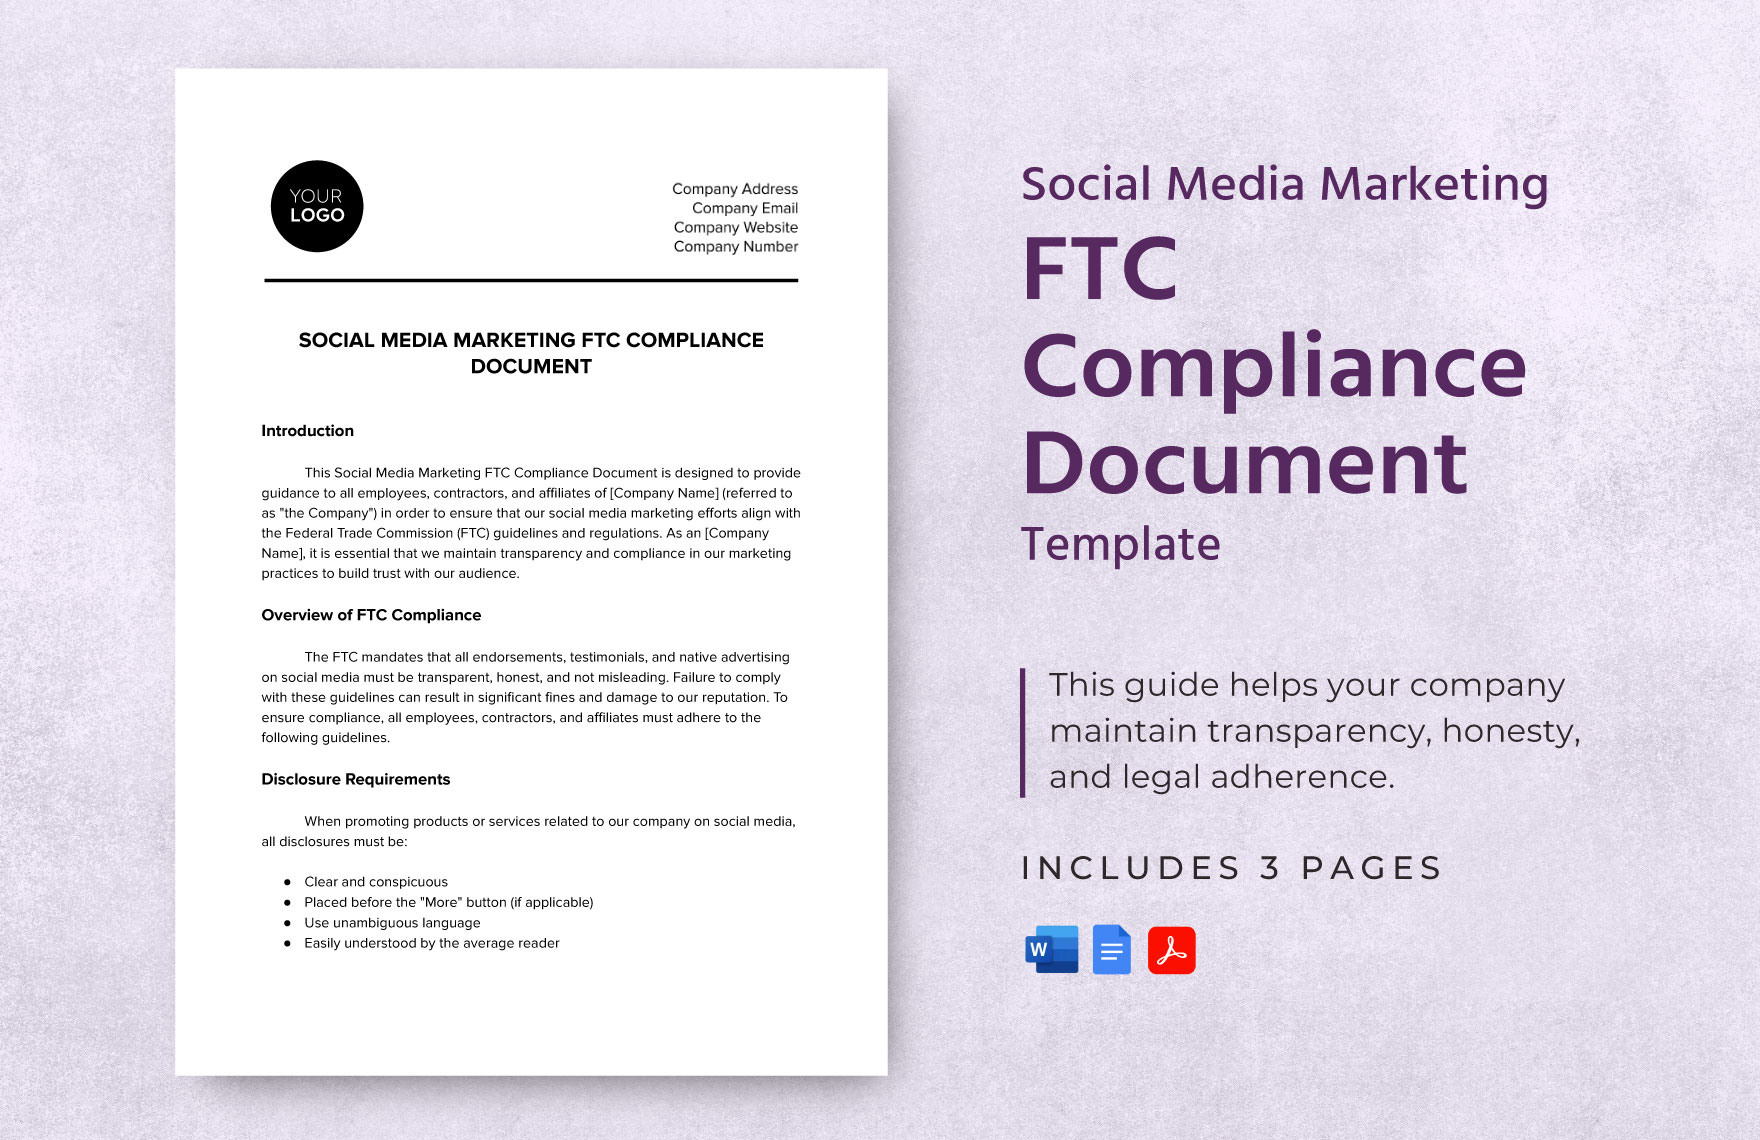 Social Media Marketing FTC Compliance Document Template